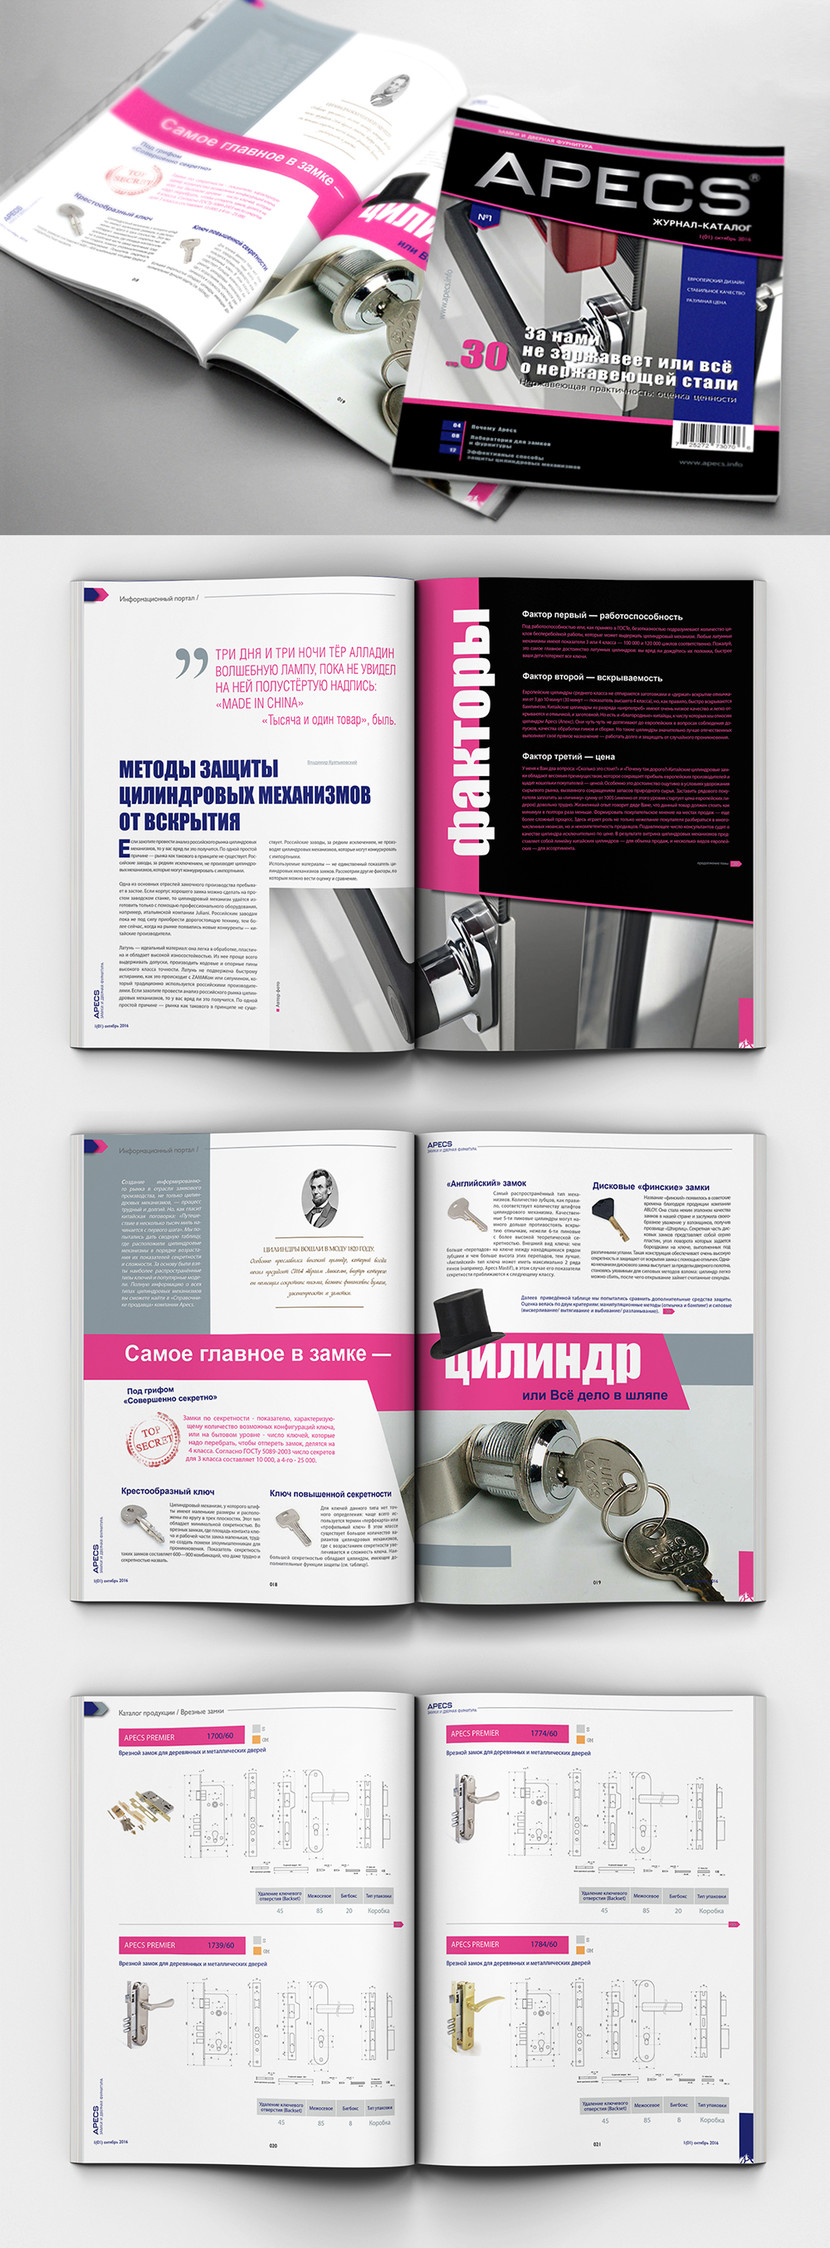 Дизайн журнала-каталога Apecs